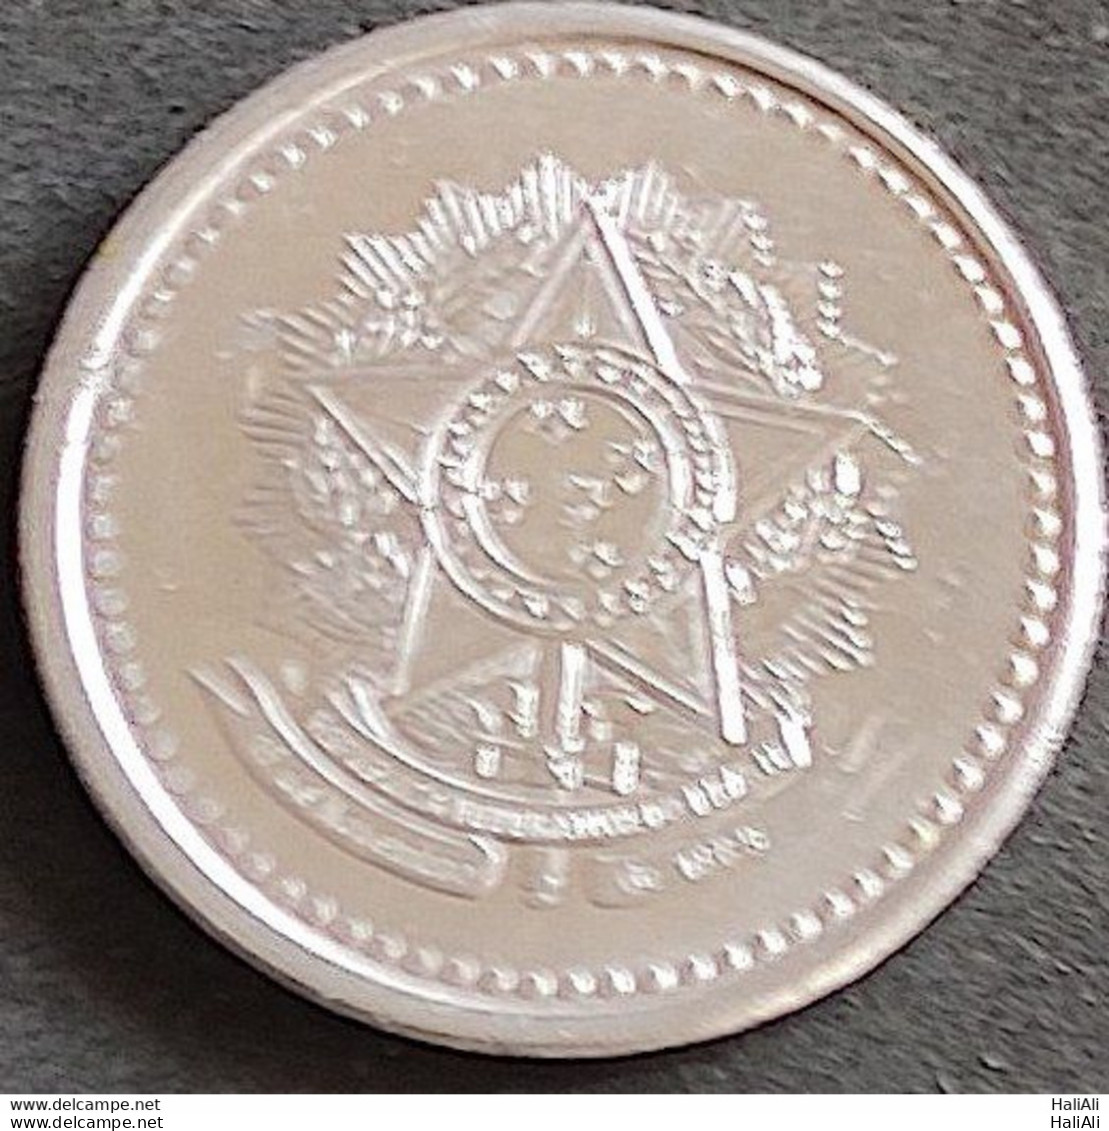 Brazil Coin 1986 50 Centavos 1 - Brazilië